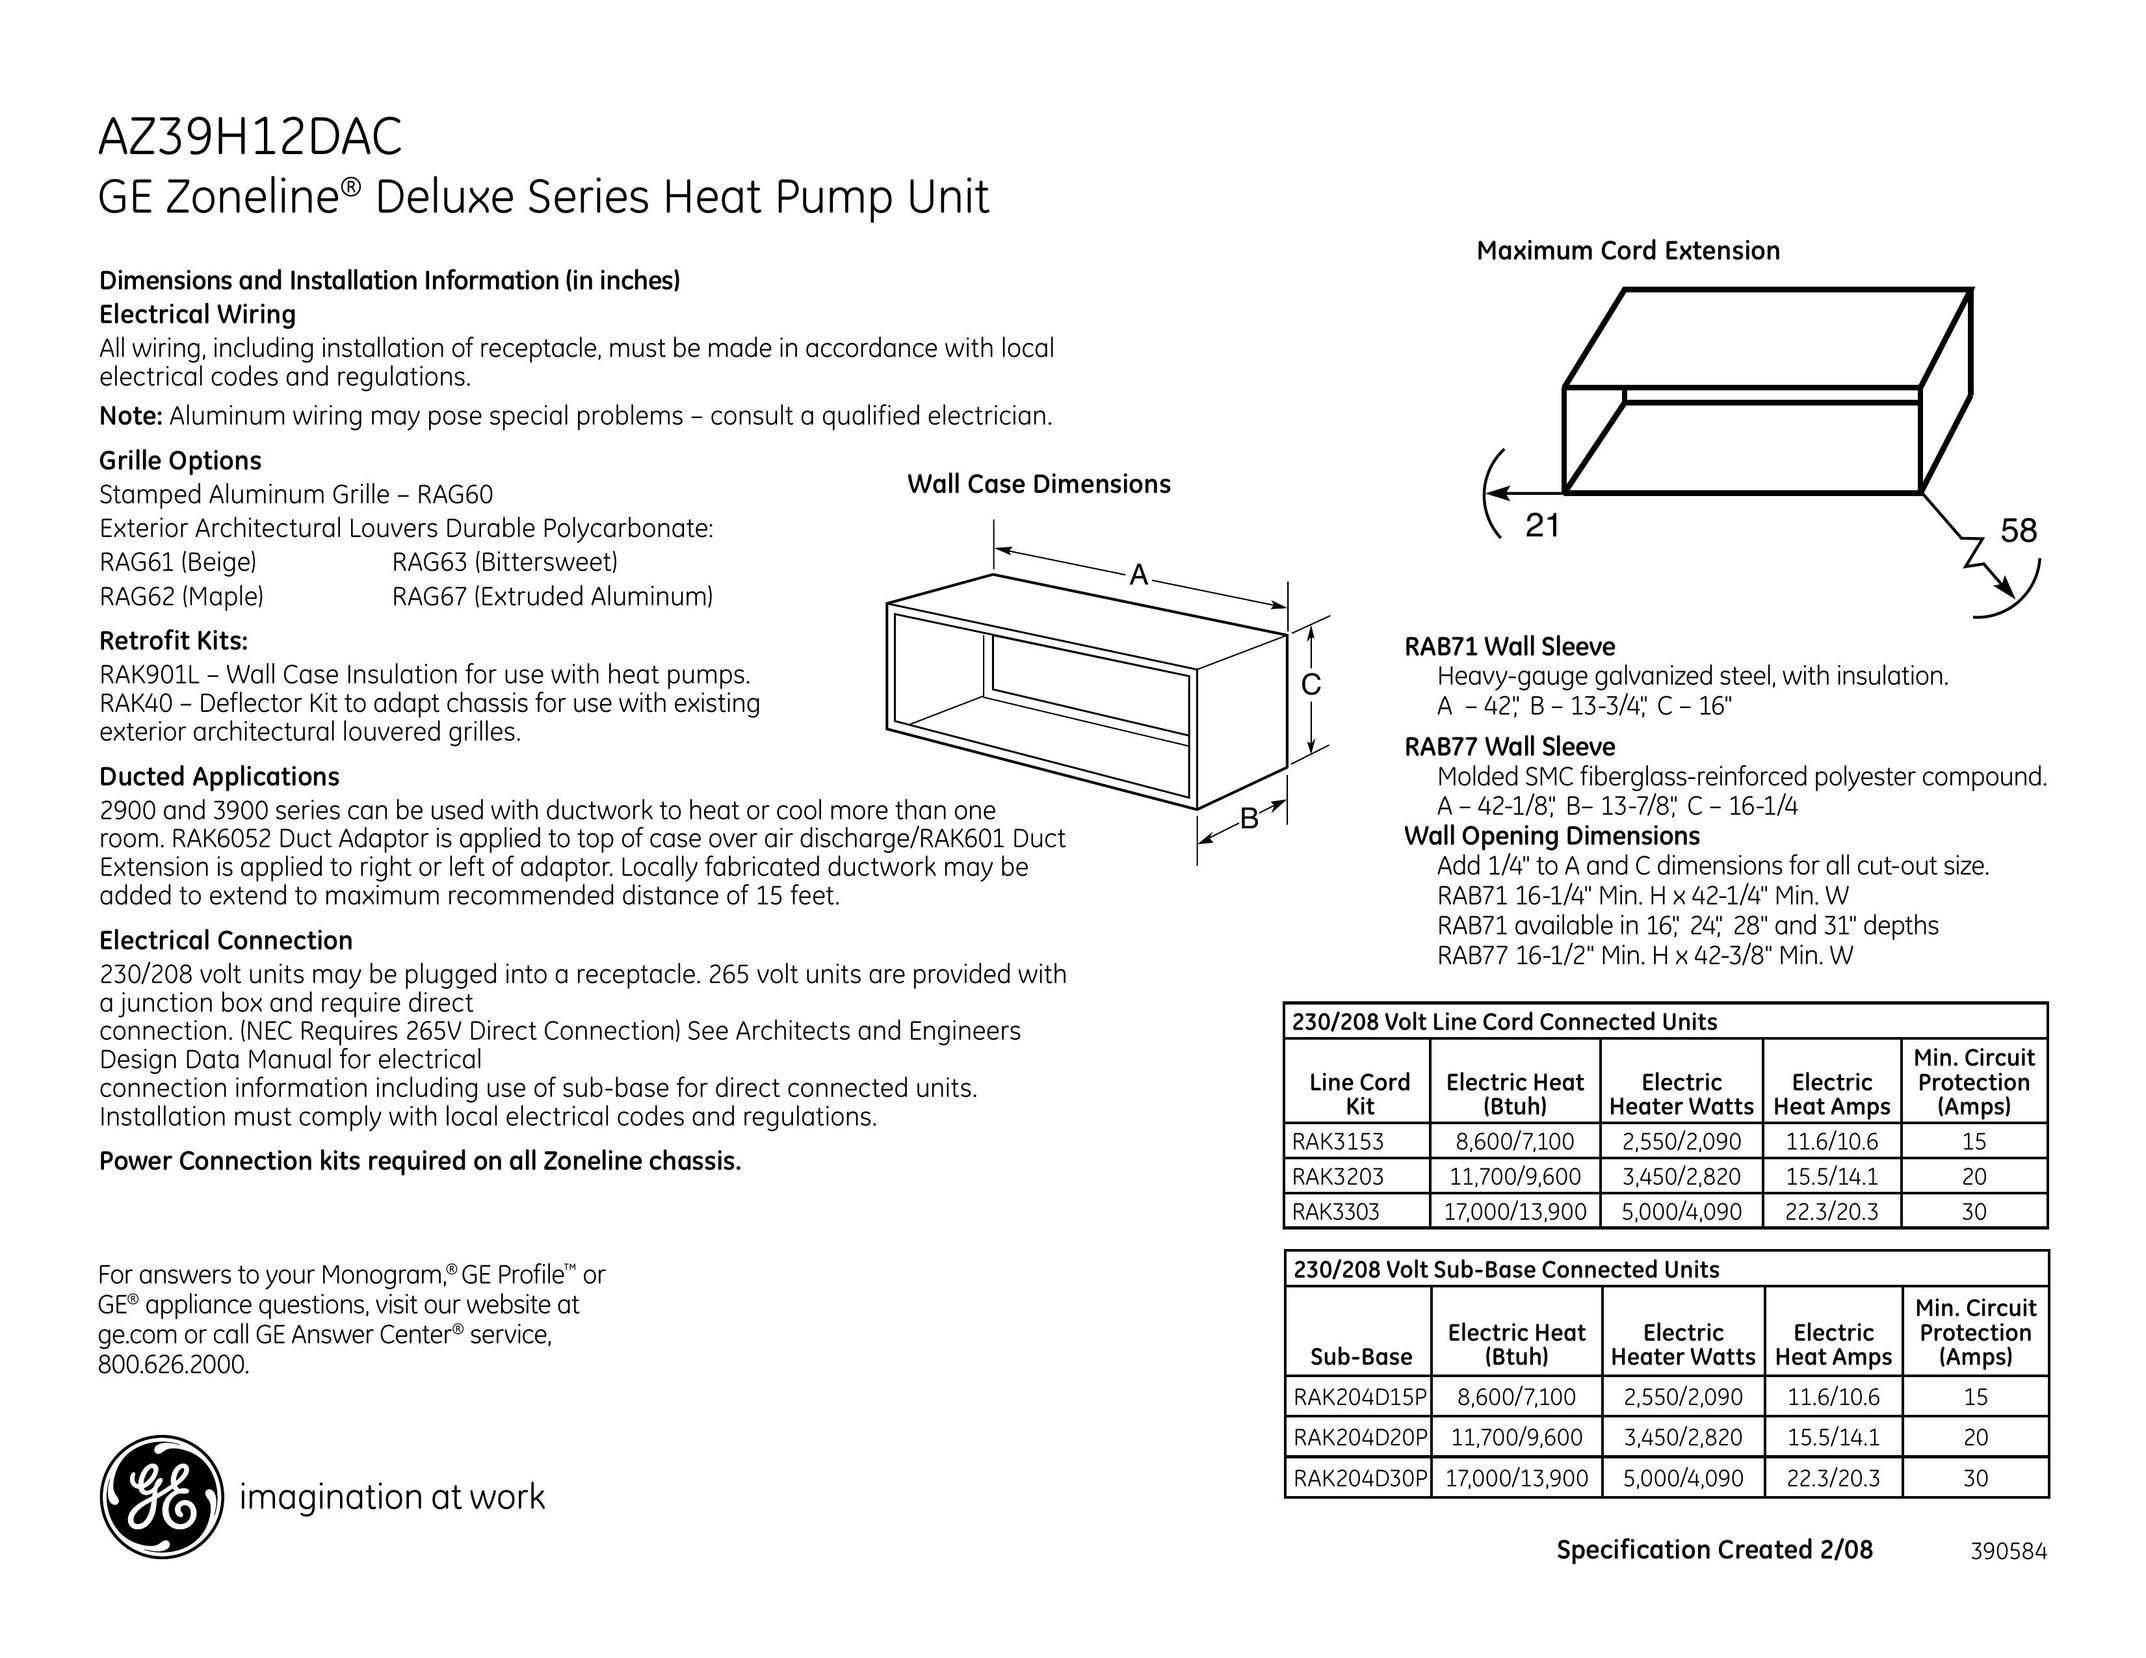 GE AZ39H12DAC Heat Pump User Manual